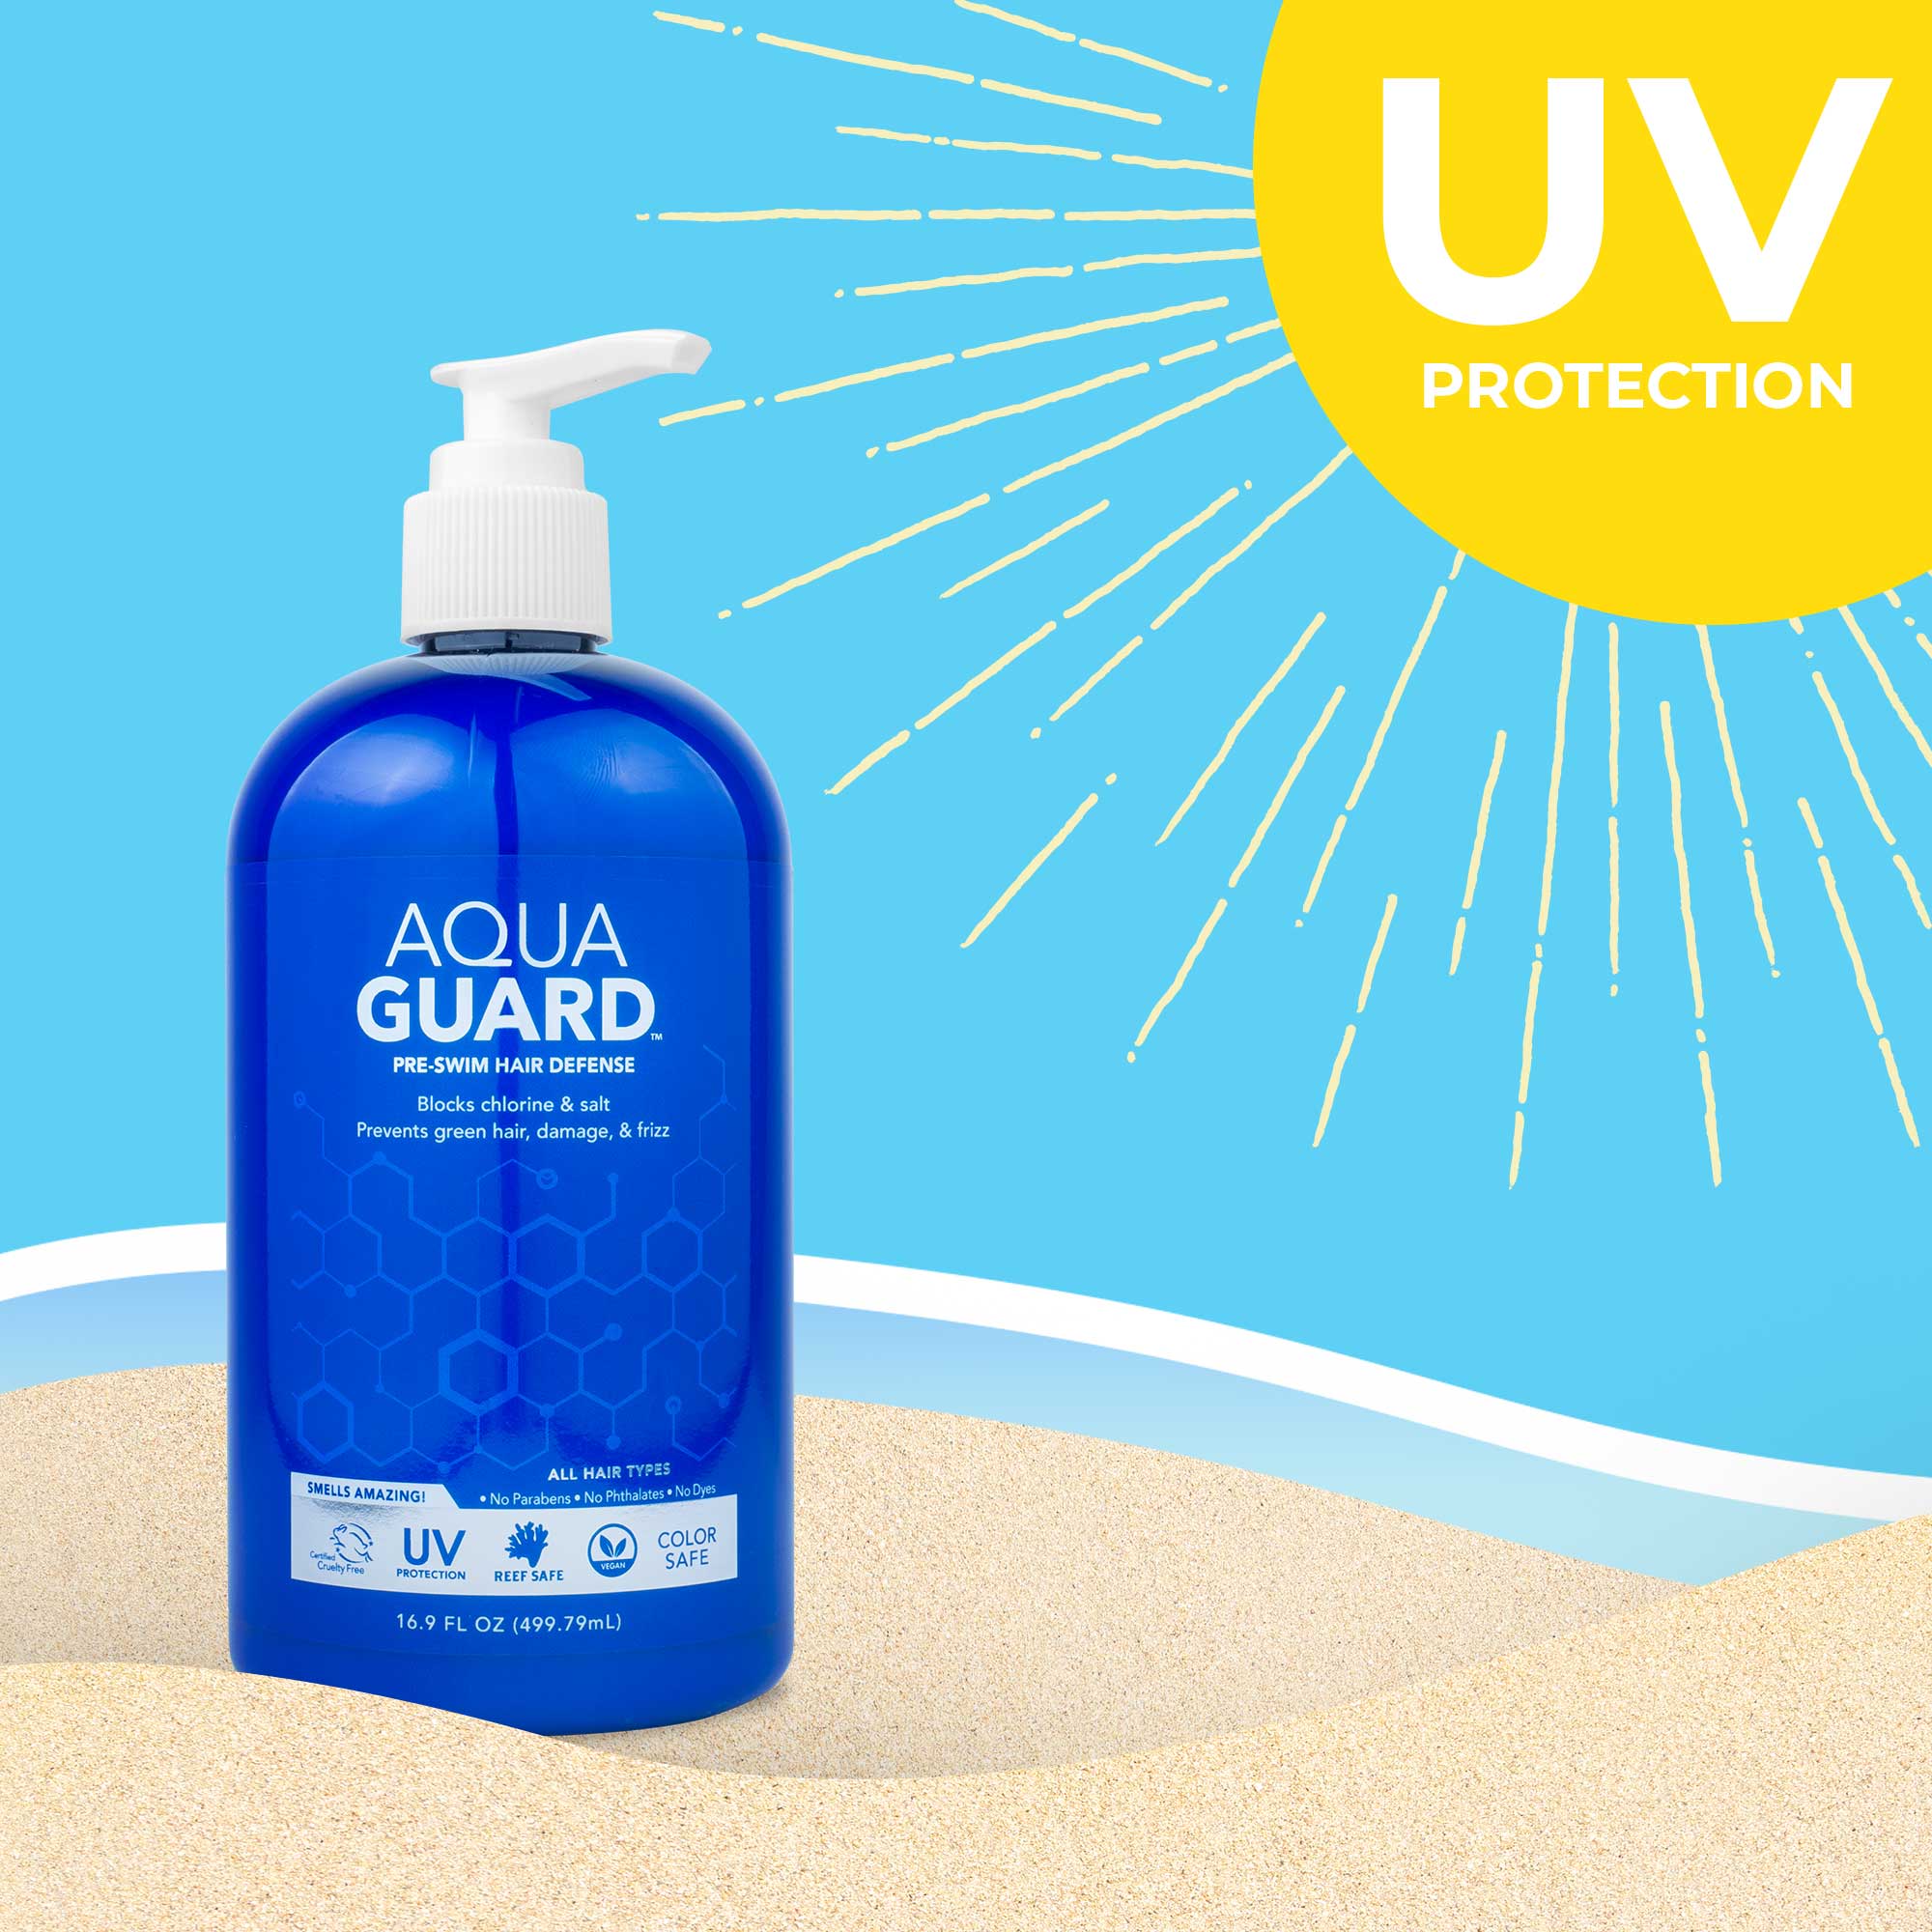 Pre-Swim Hair Defense + UV